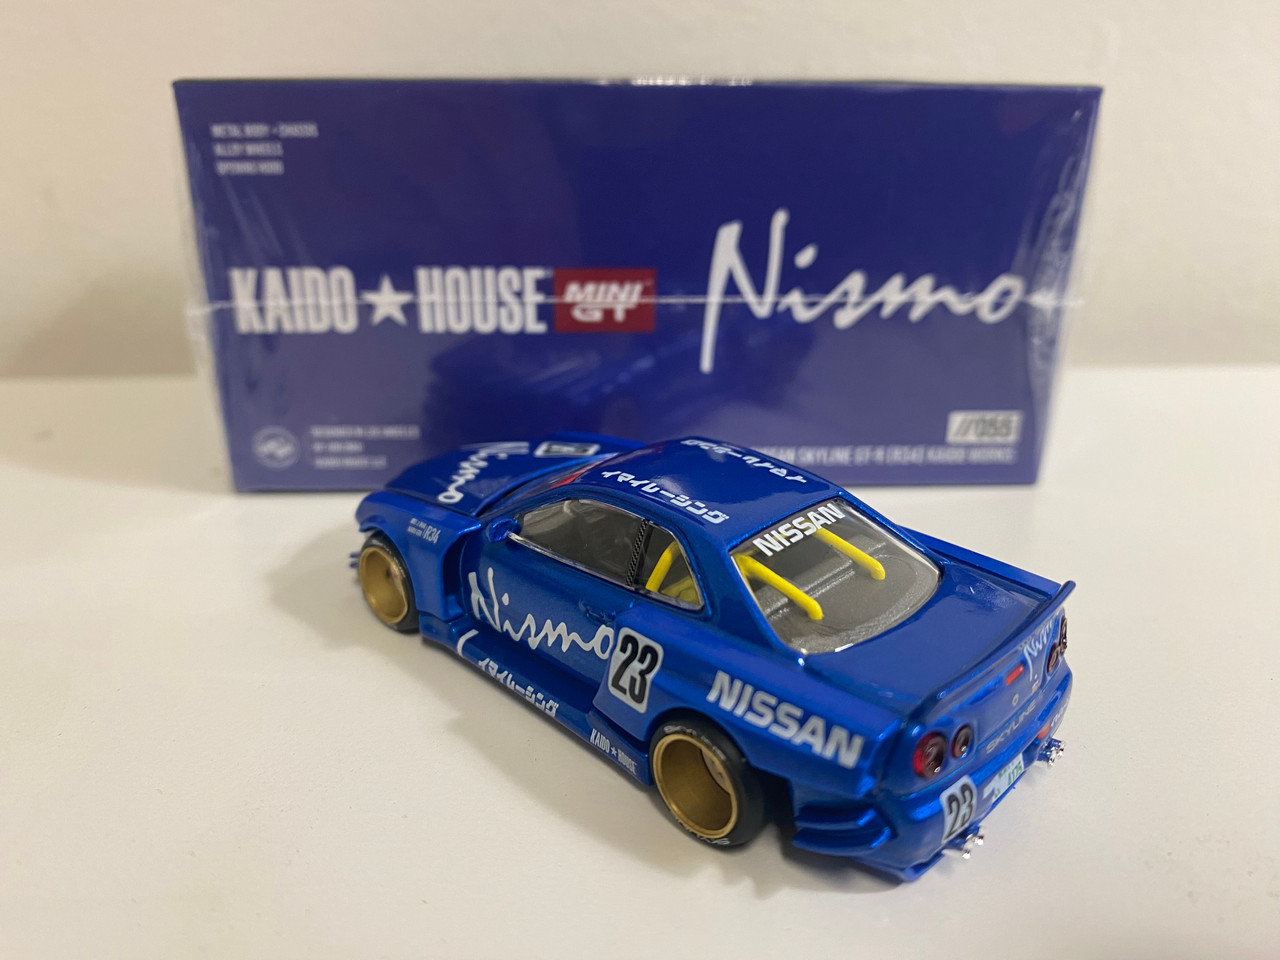 CHASE CAR 1/64 Kaido House & Mini GT Nissan Skyline GT-R (R34) Kaido Works V3 Diecast Car Model